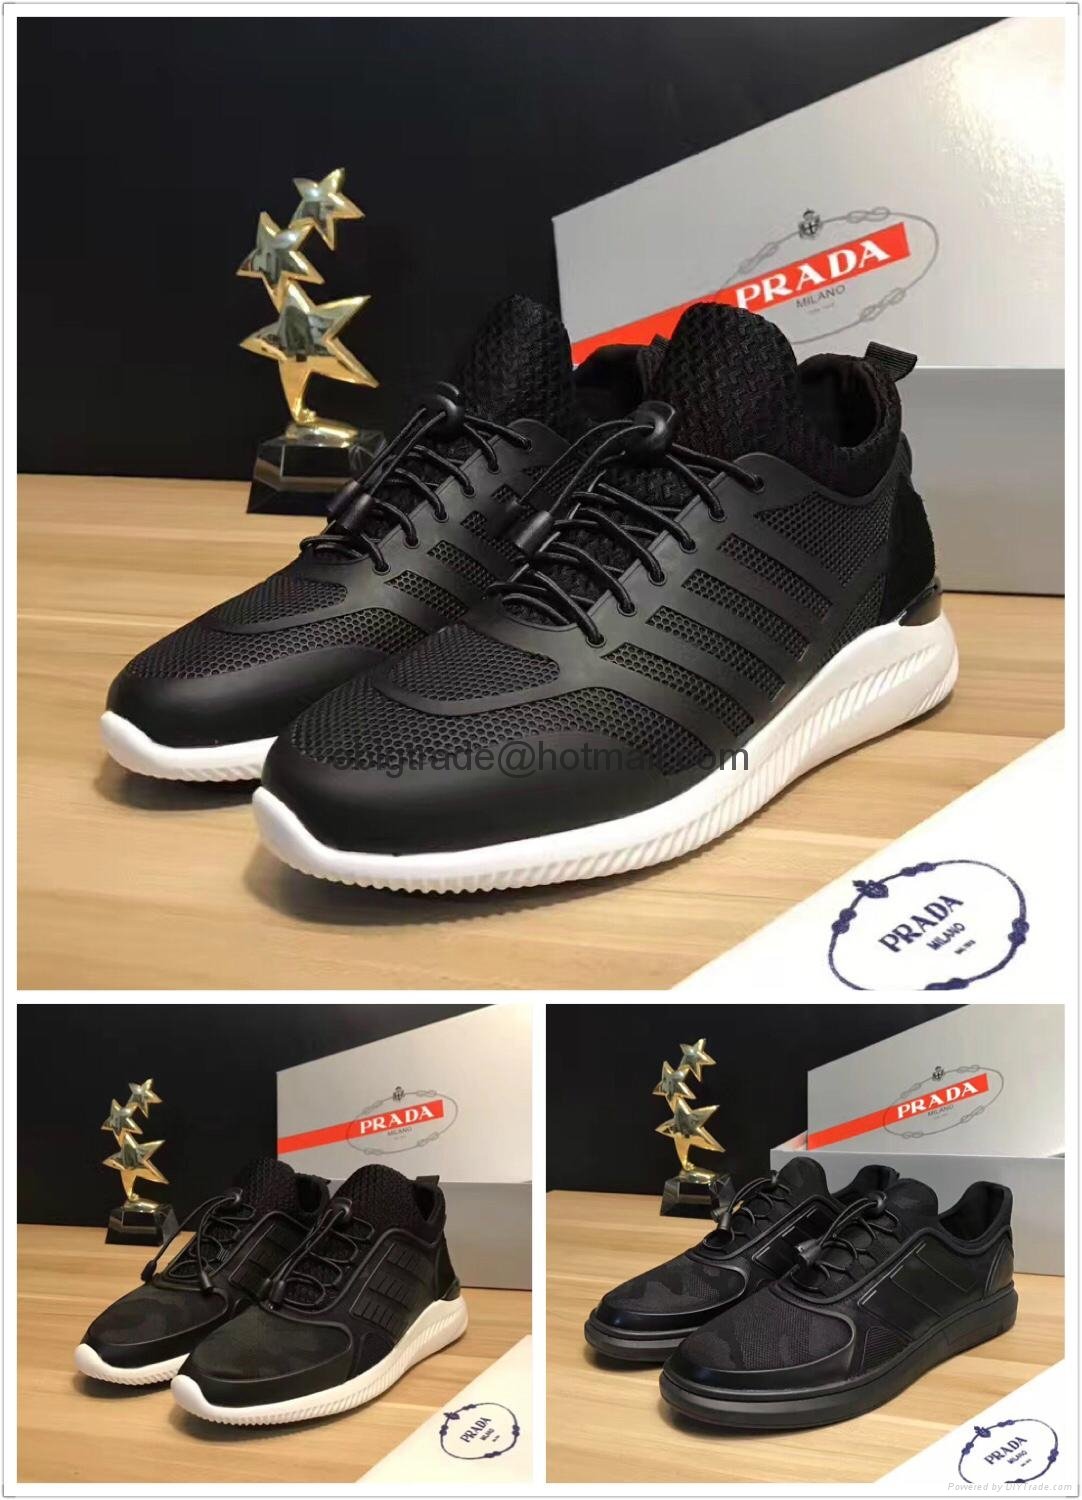 Cheap Prada shoes for men Replica Prada shoes on sale Prada sneakers for men (China Trading ...